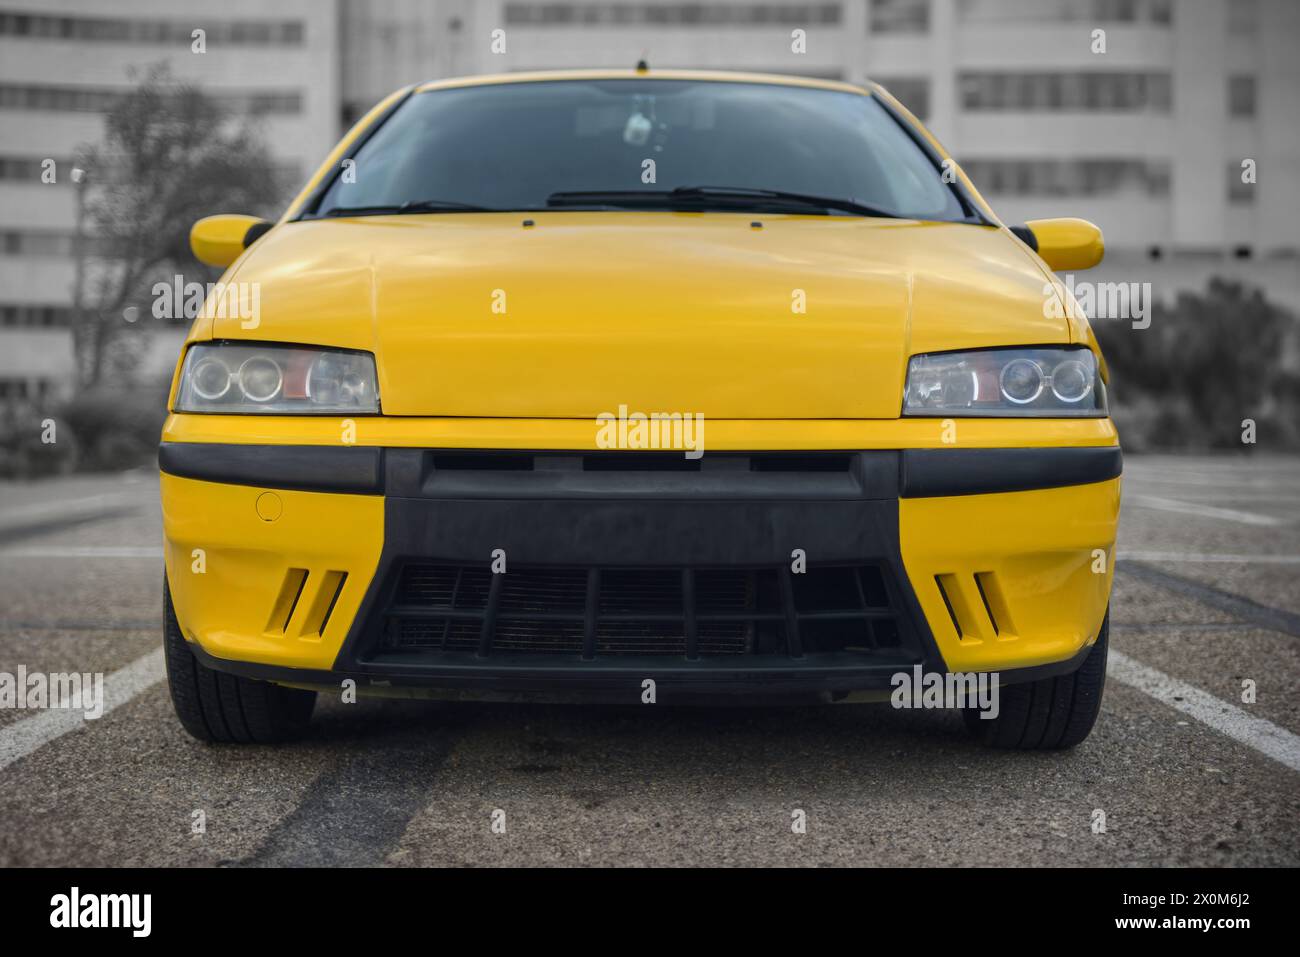 frontal photo of an Italian yellow hot hatch sport car Stock Photo